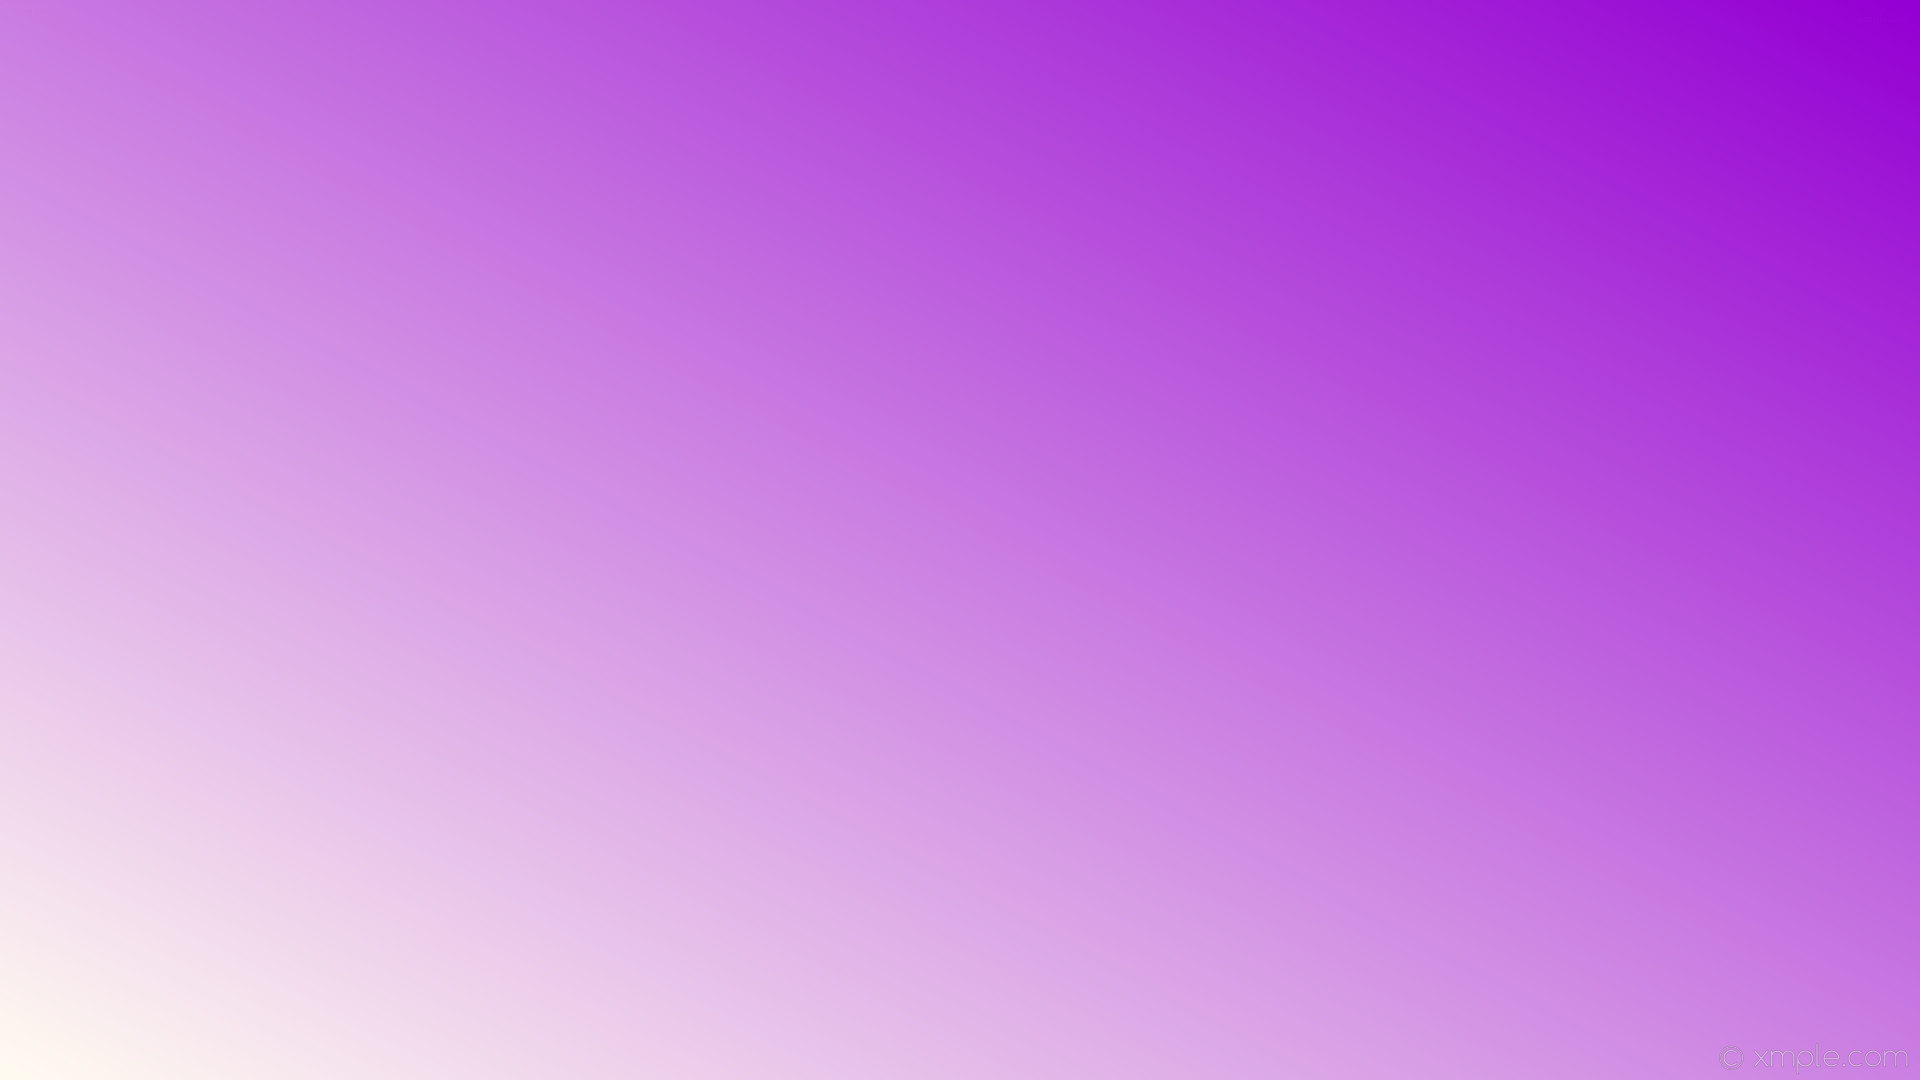 1920x1080 wallpaper gradient purple white linear dark violet floral white #9400d3  #fffaf0 30Â°